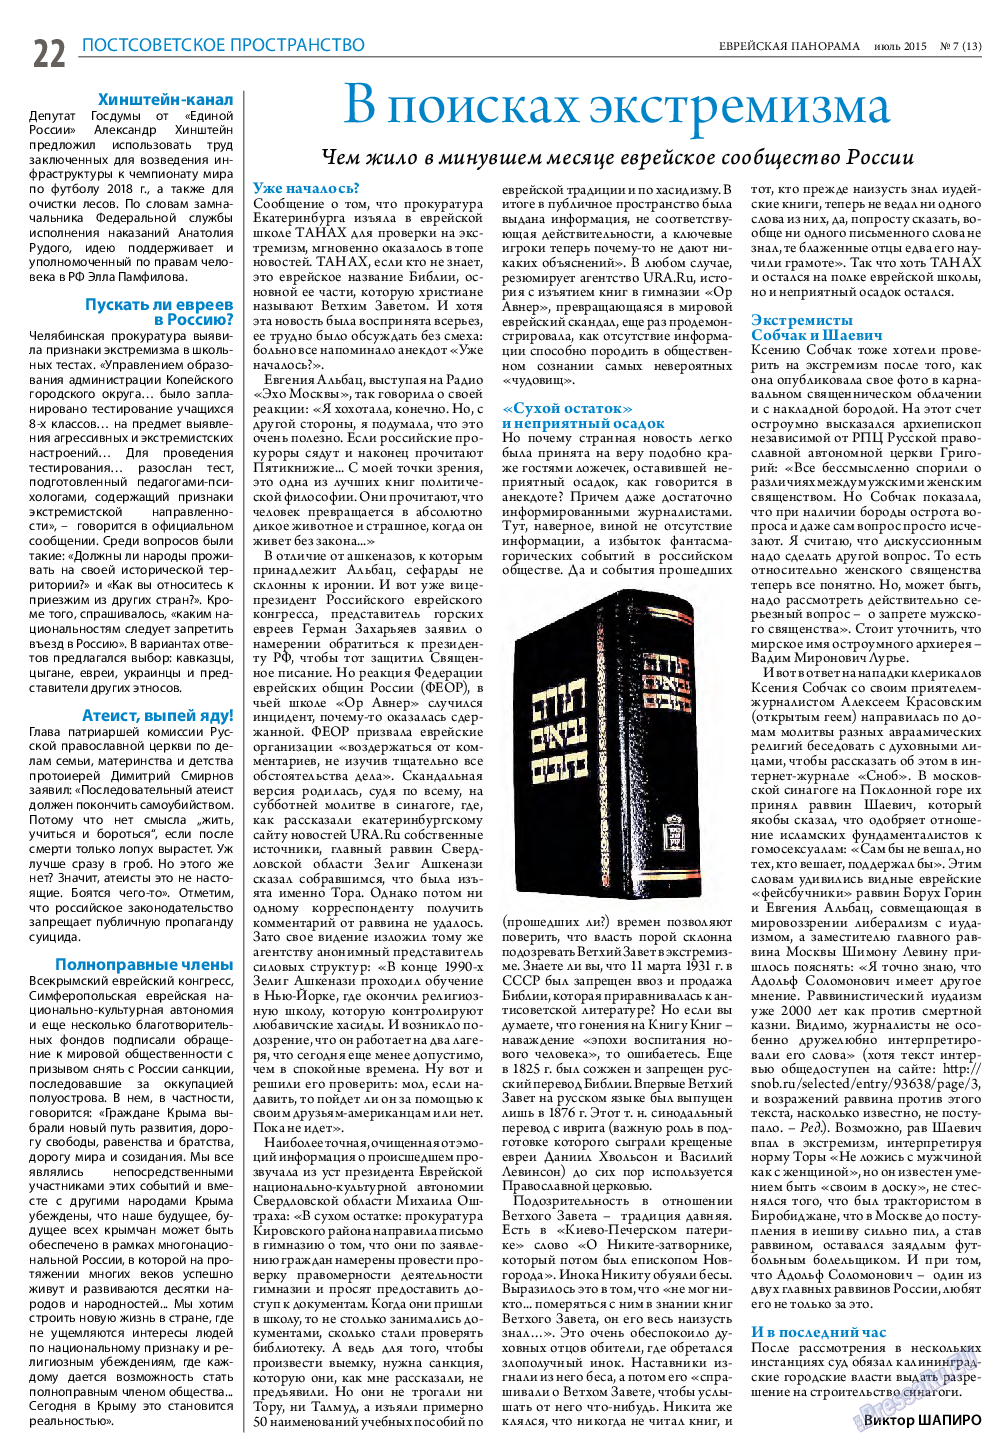 Еврейская панорама, газета. 2015 №7 стр.22